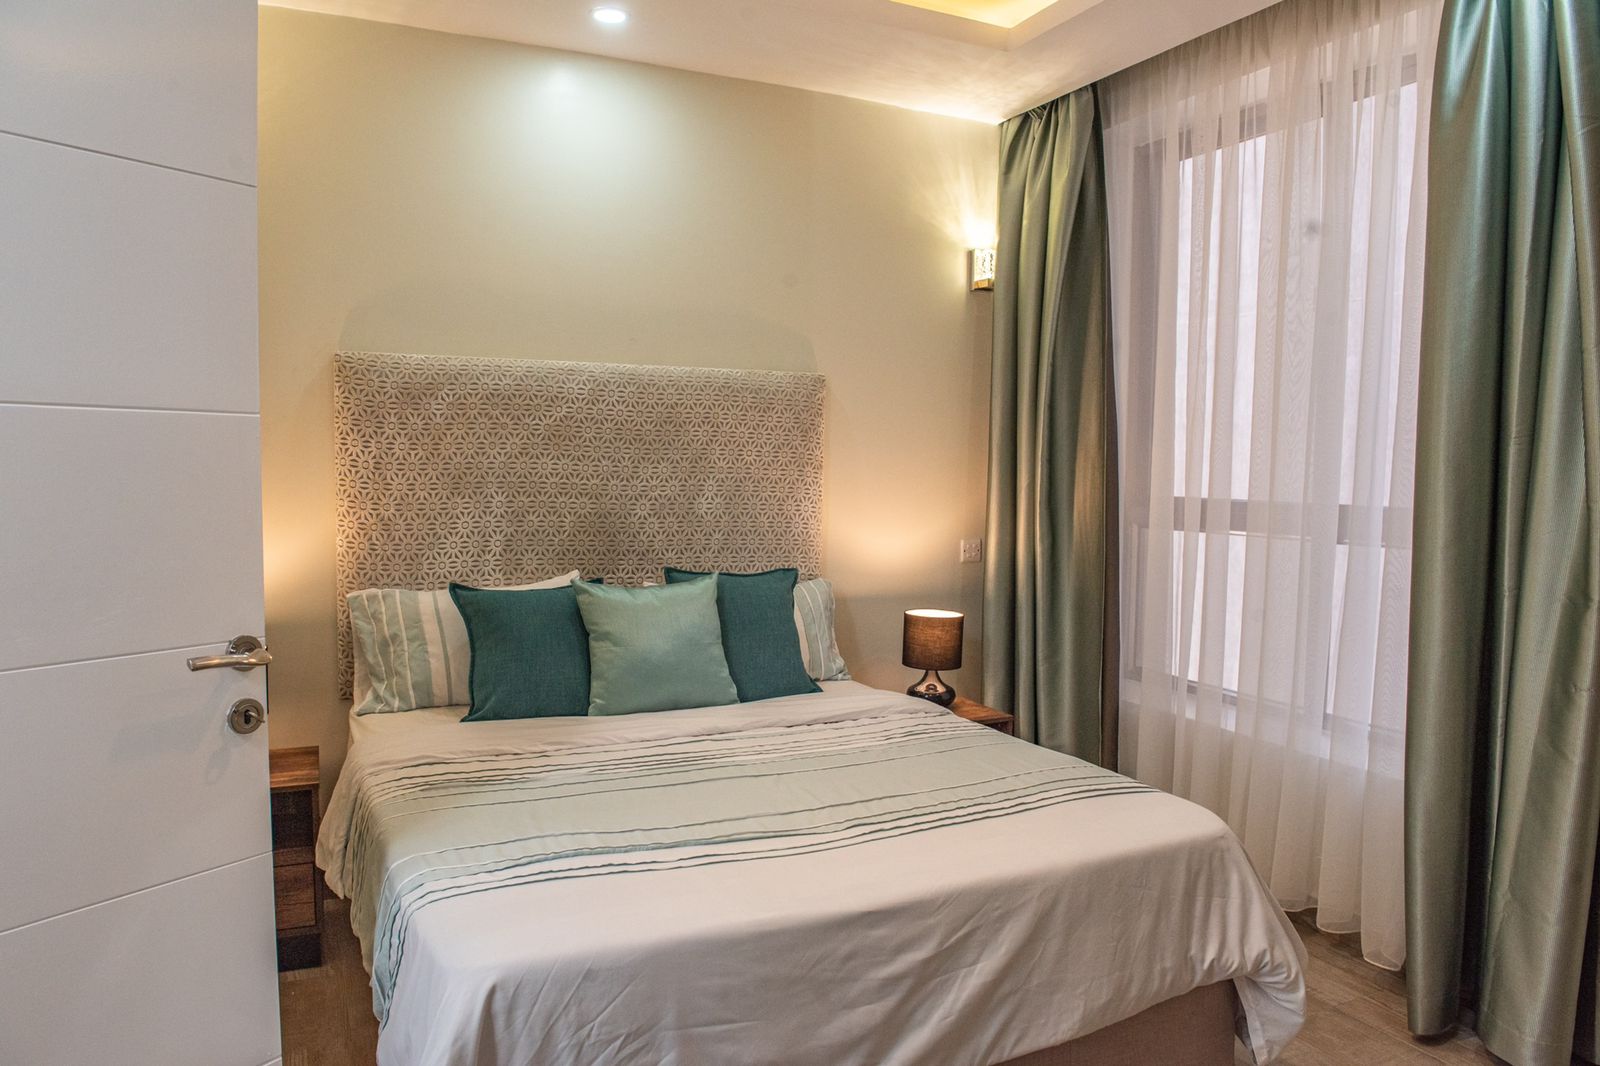 An Elegant Fully Furnished 2 Bedroom Apartments For Rent In Kileleshwa at Ksh180k:Month11